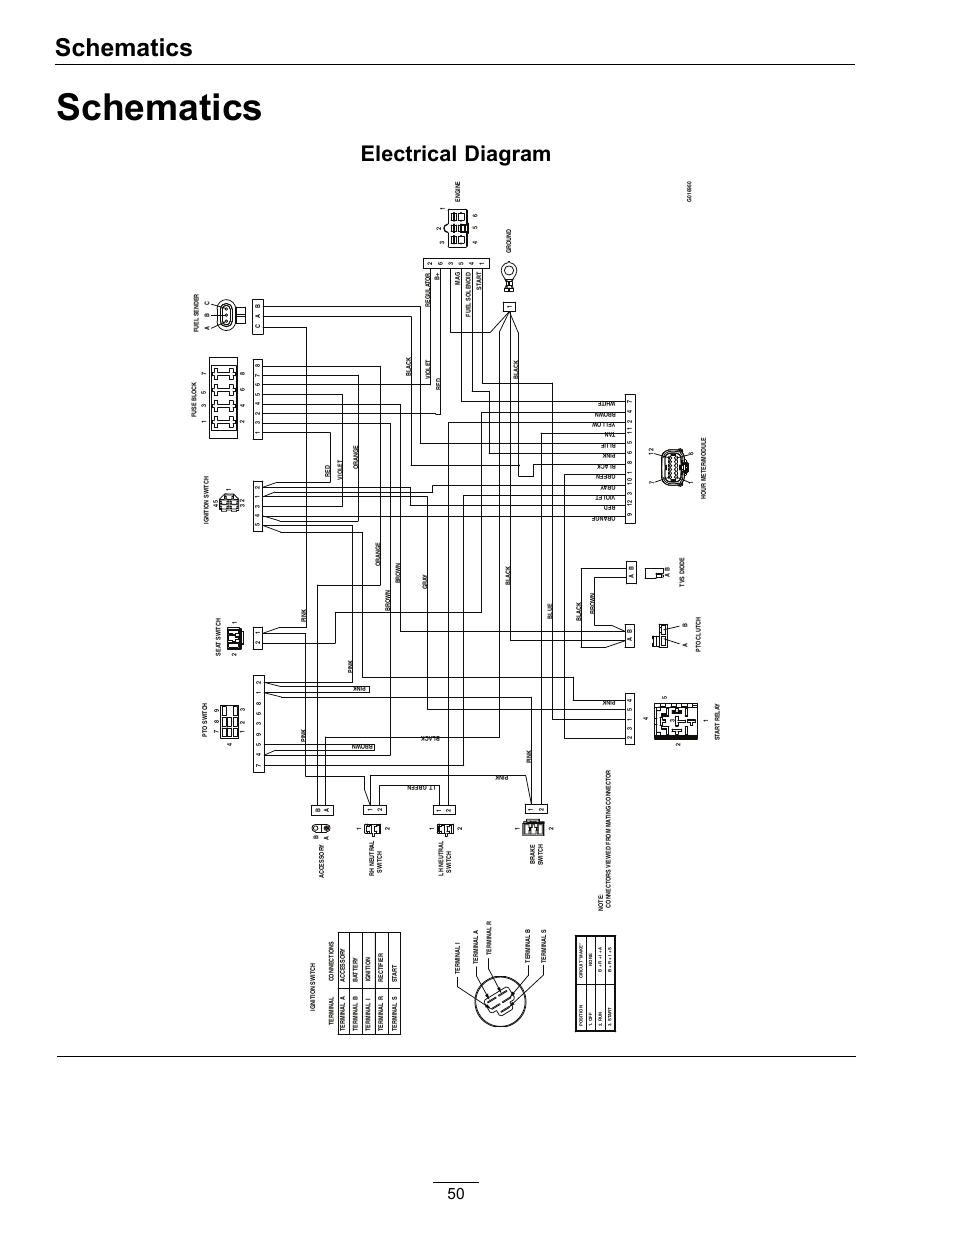 [DIAGRAM] Nissan Navara User Wiring Diagram FULL Version HD Quality